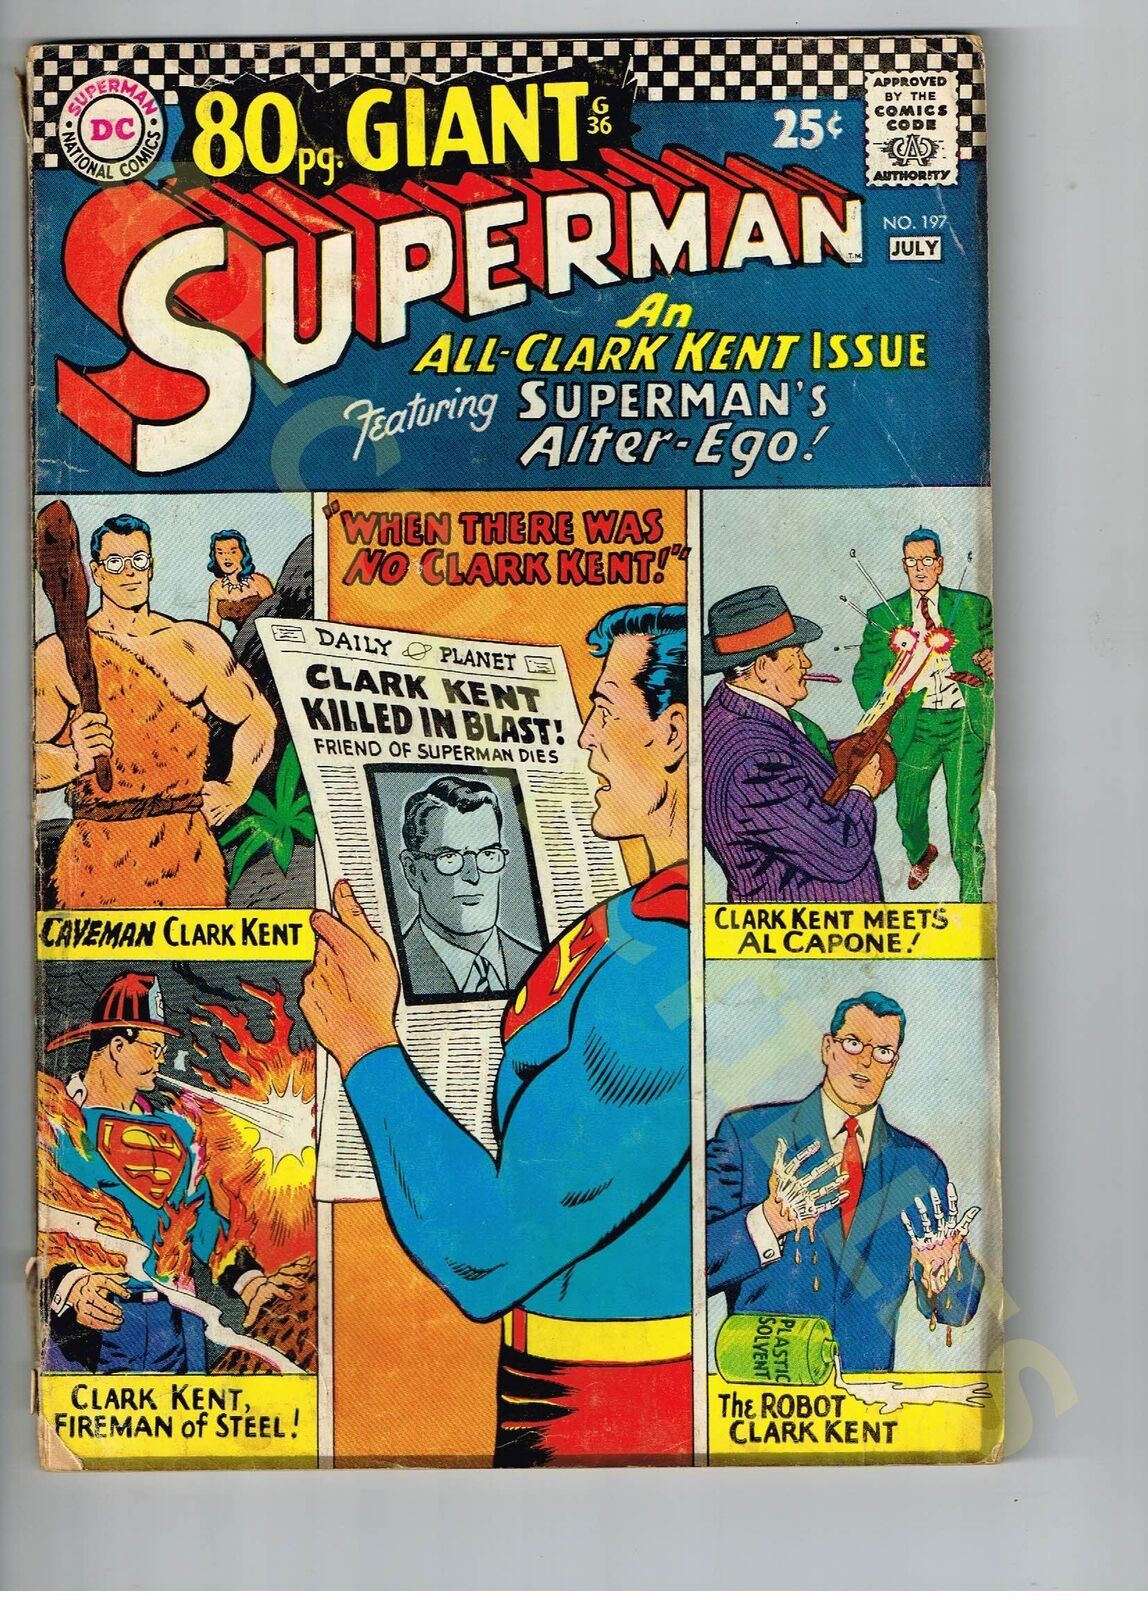 Vintage comic book DC Superman 80-Page Giant #197 July 1967 Clark Kent         